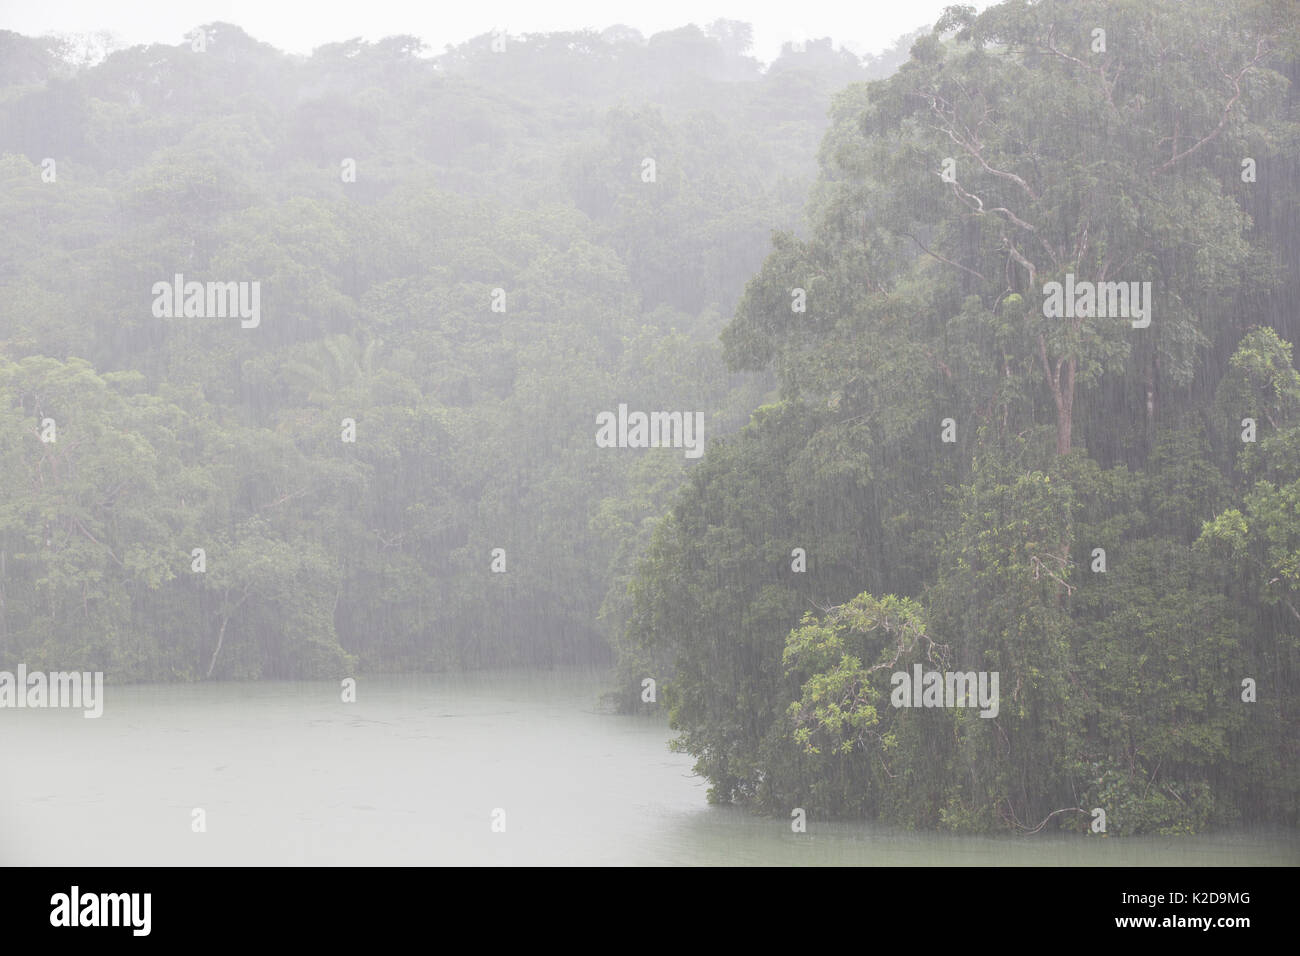 Tropischer Regenwald Szene mit Regen, Gatun See, Barro Colorado Island, Gatun See, Panama Canal, Panama, Stockfoto